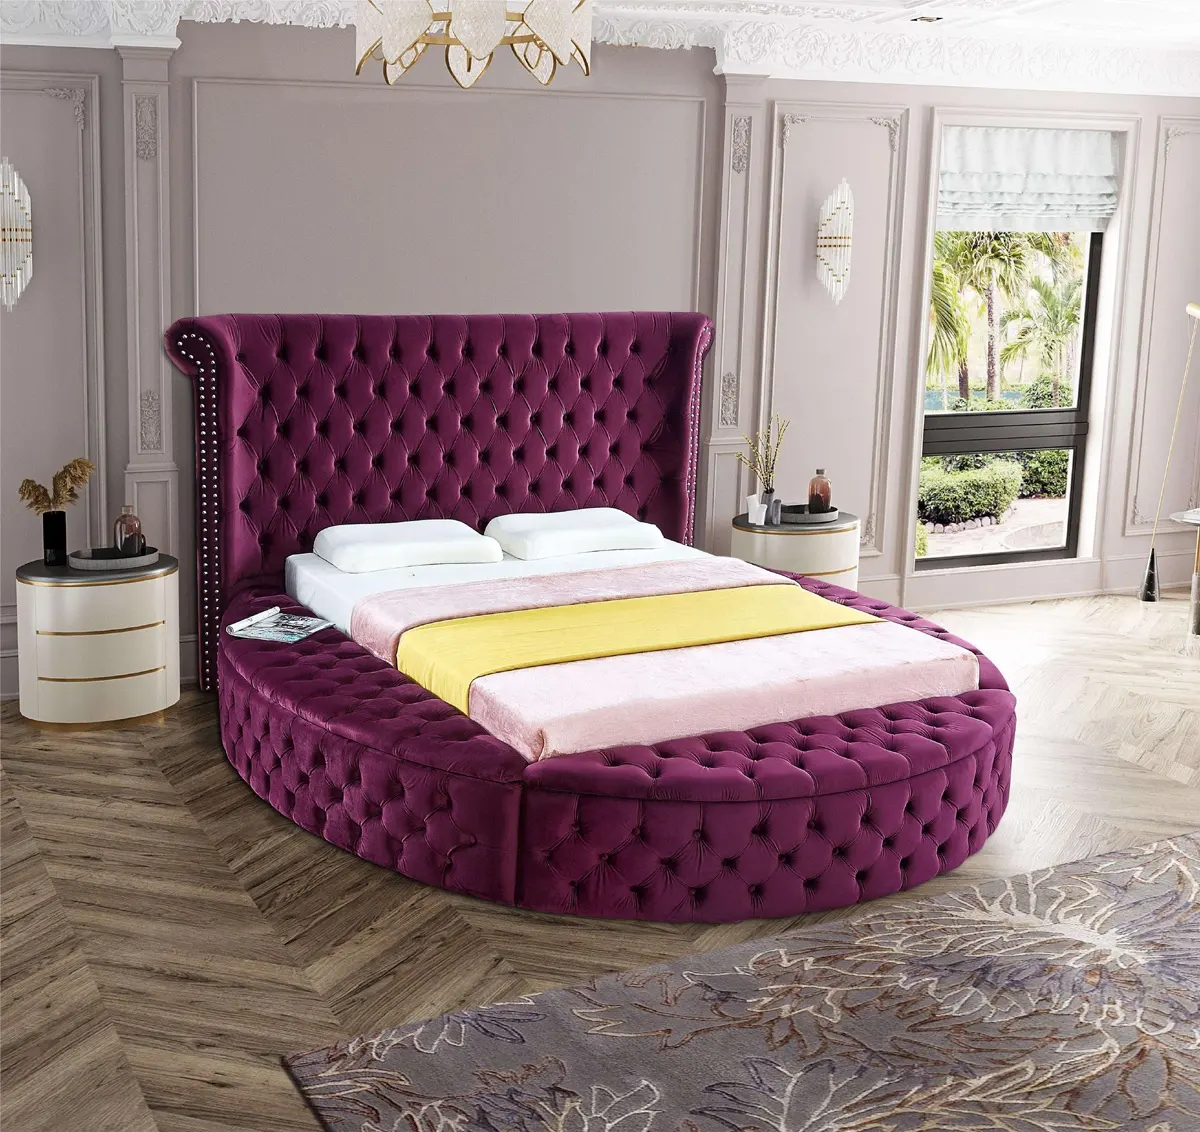 Hotel round bed frame Bedroom sets Velvet Queen King Size Round Bed With Storage bed frame sets for bedroom